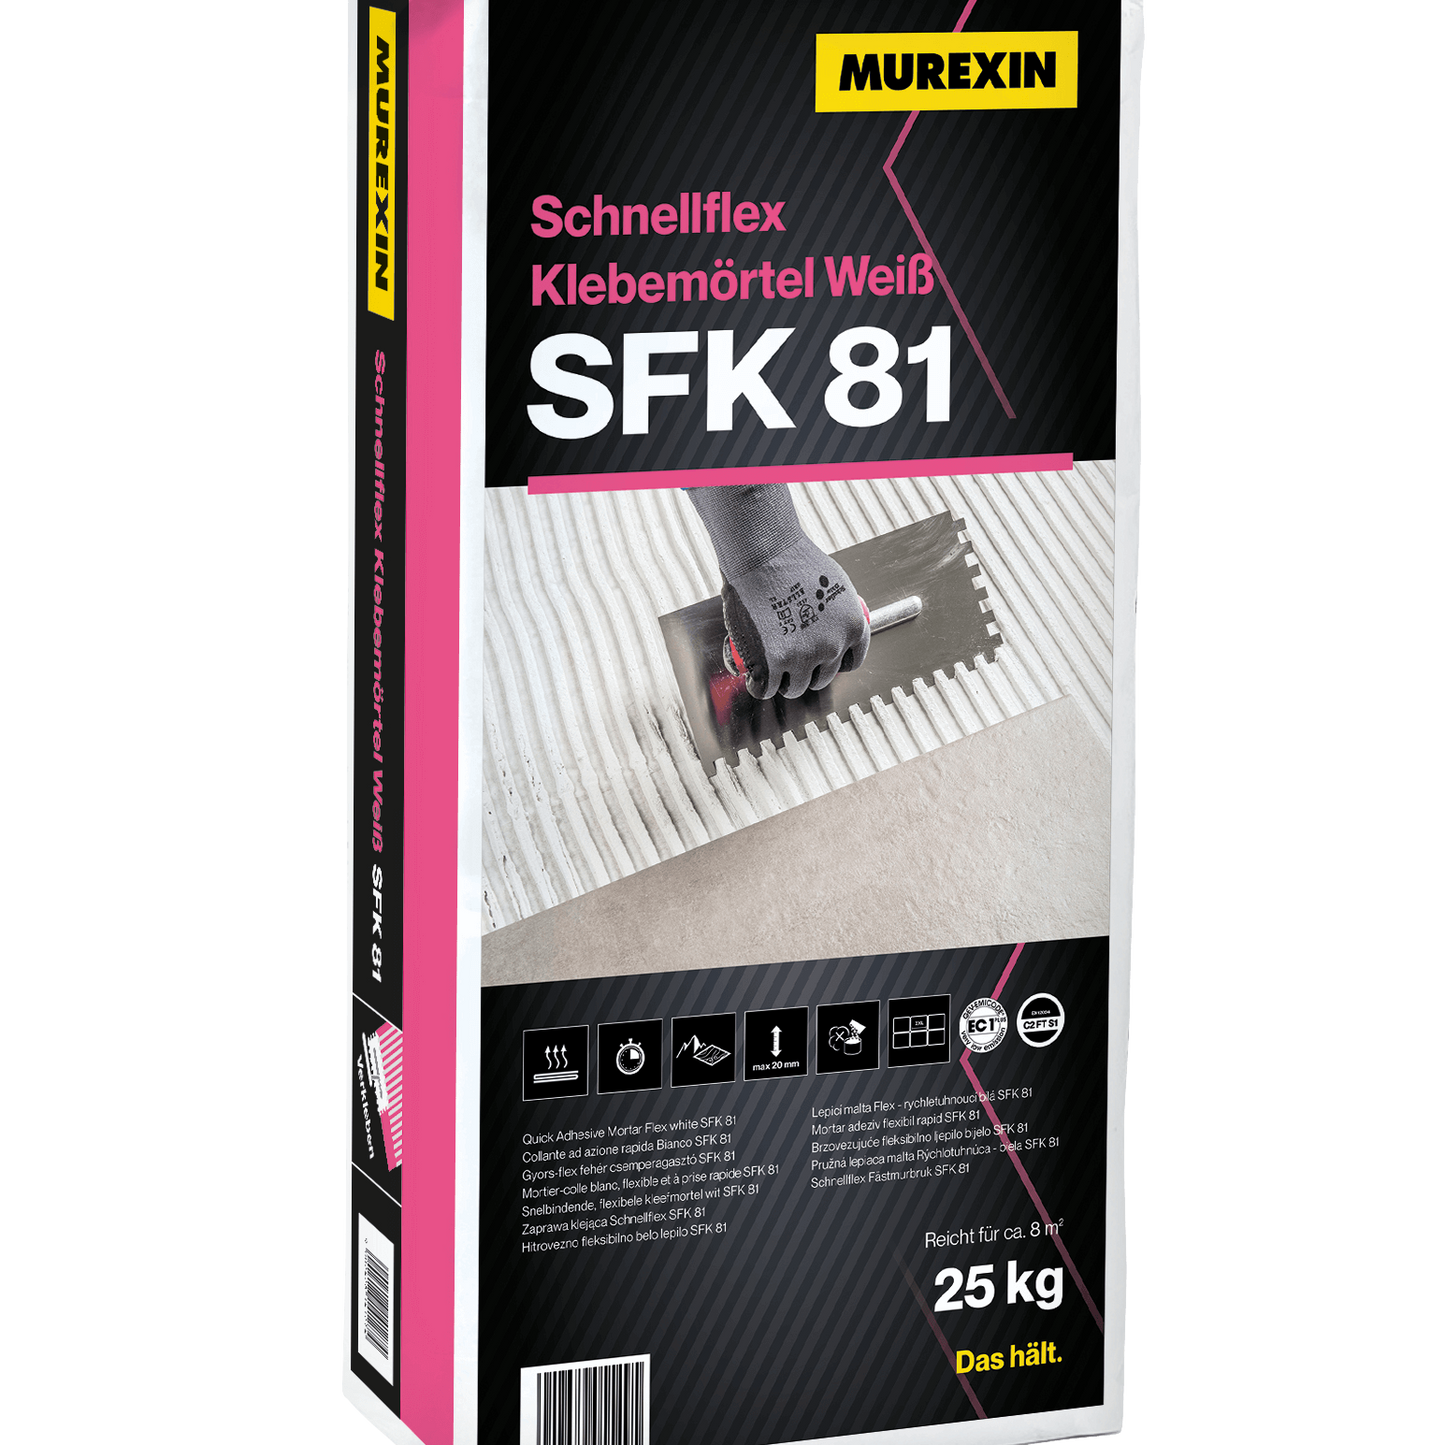 Schnellflex adhesive mortar white SFK 81 Murexin - natural stone adhesive 